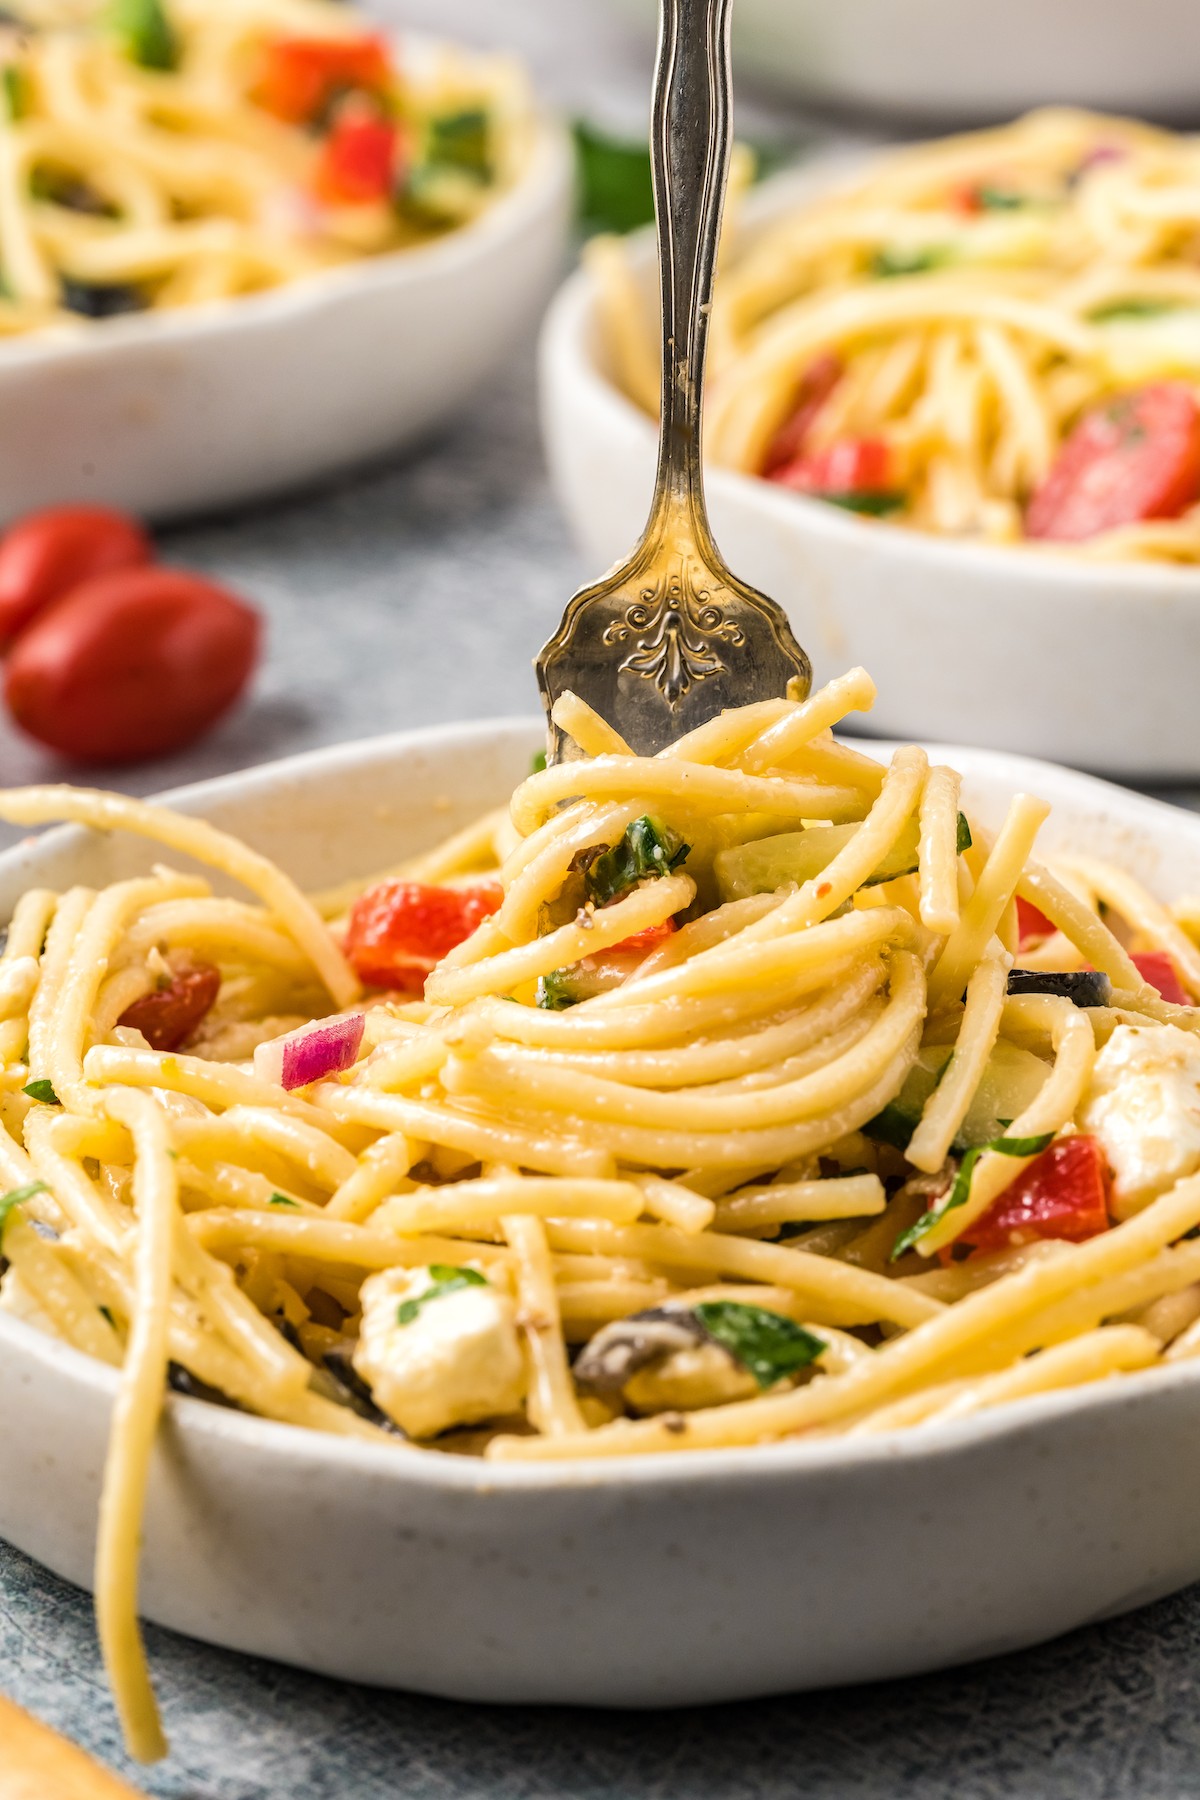 Swirling pasta around a fork.